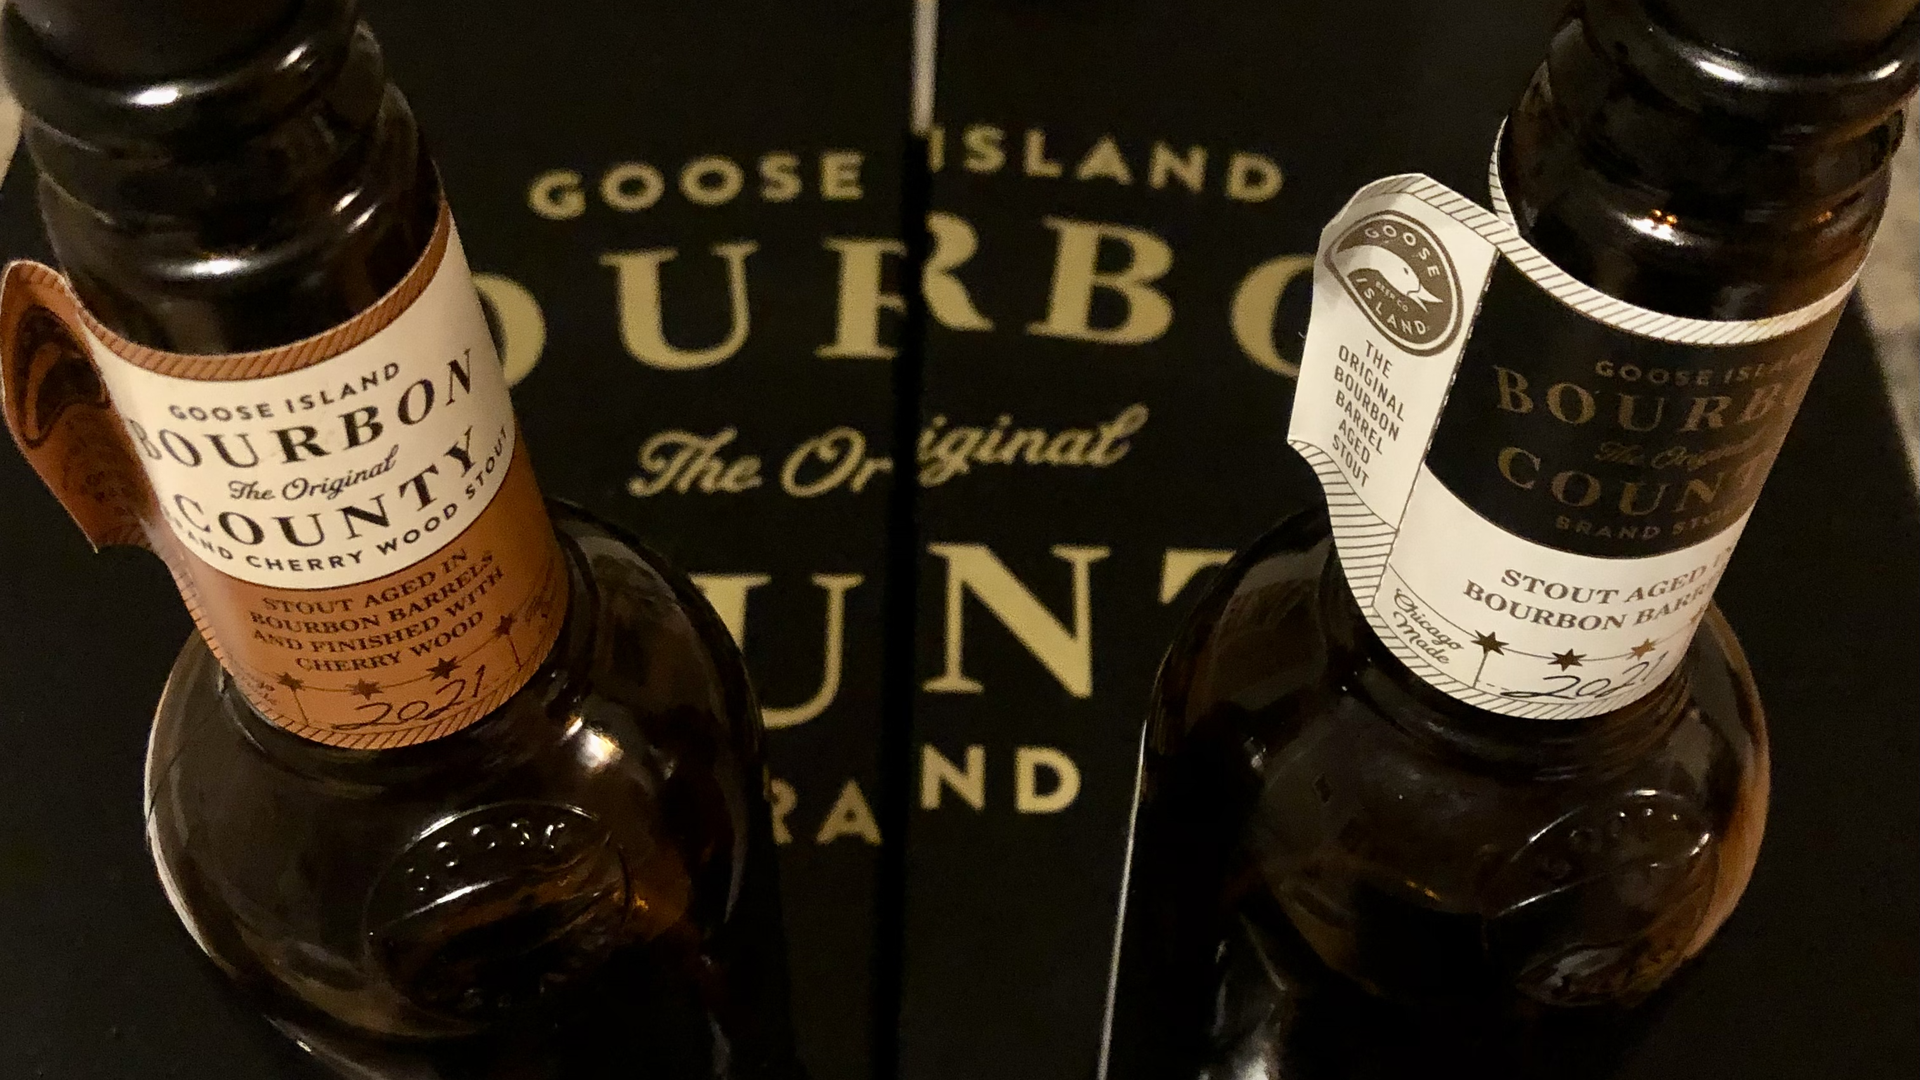 Bottles of Goose Island's Bourbon County stouts